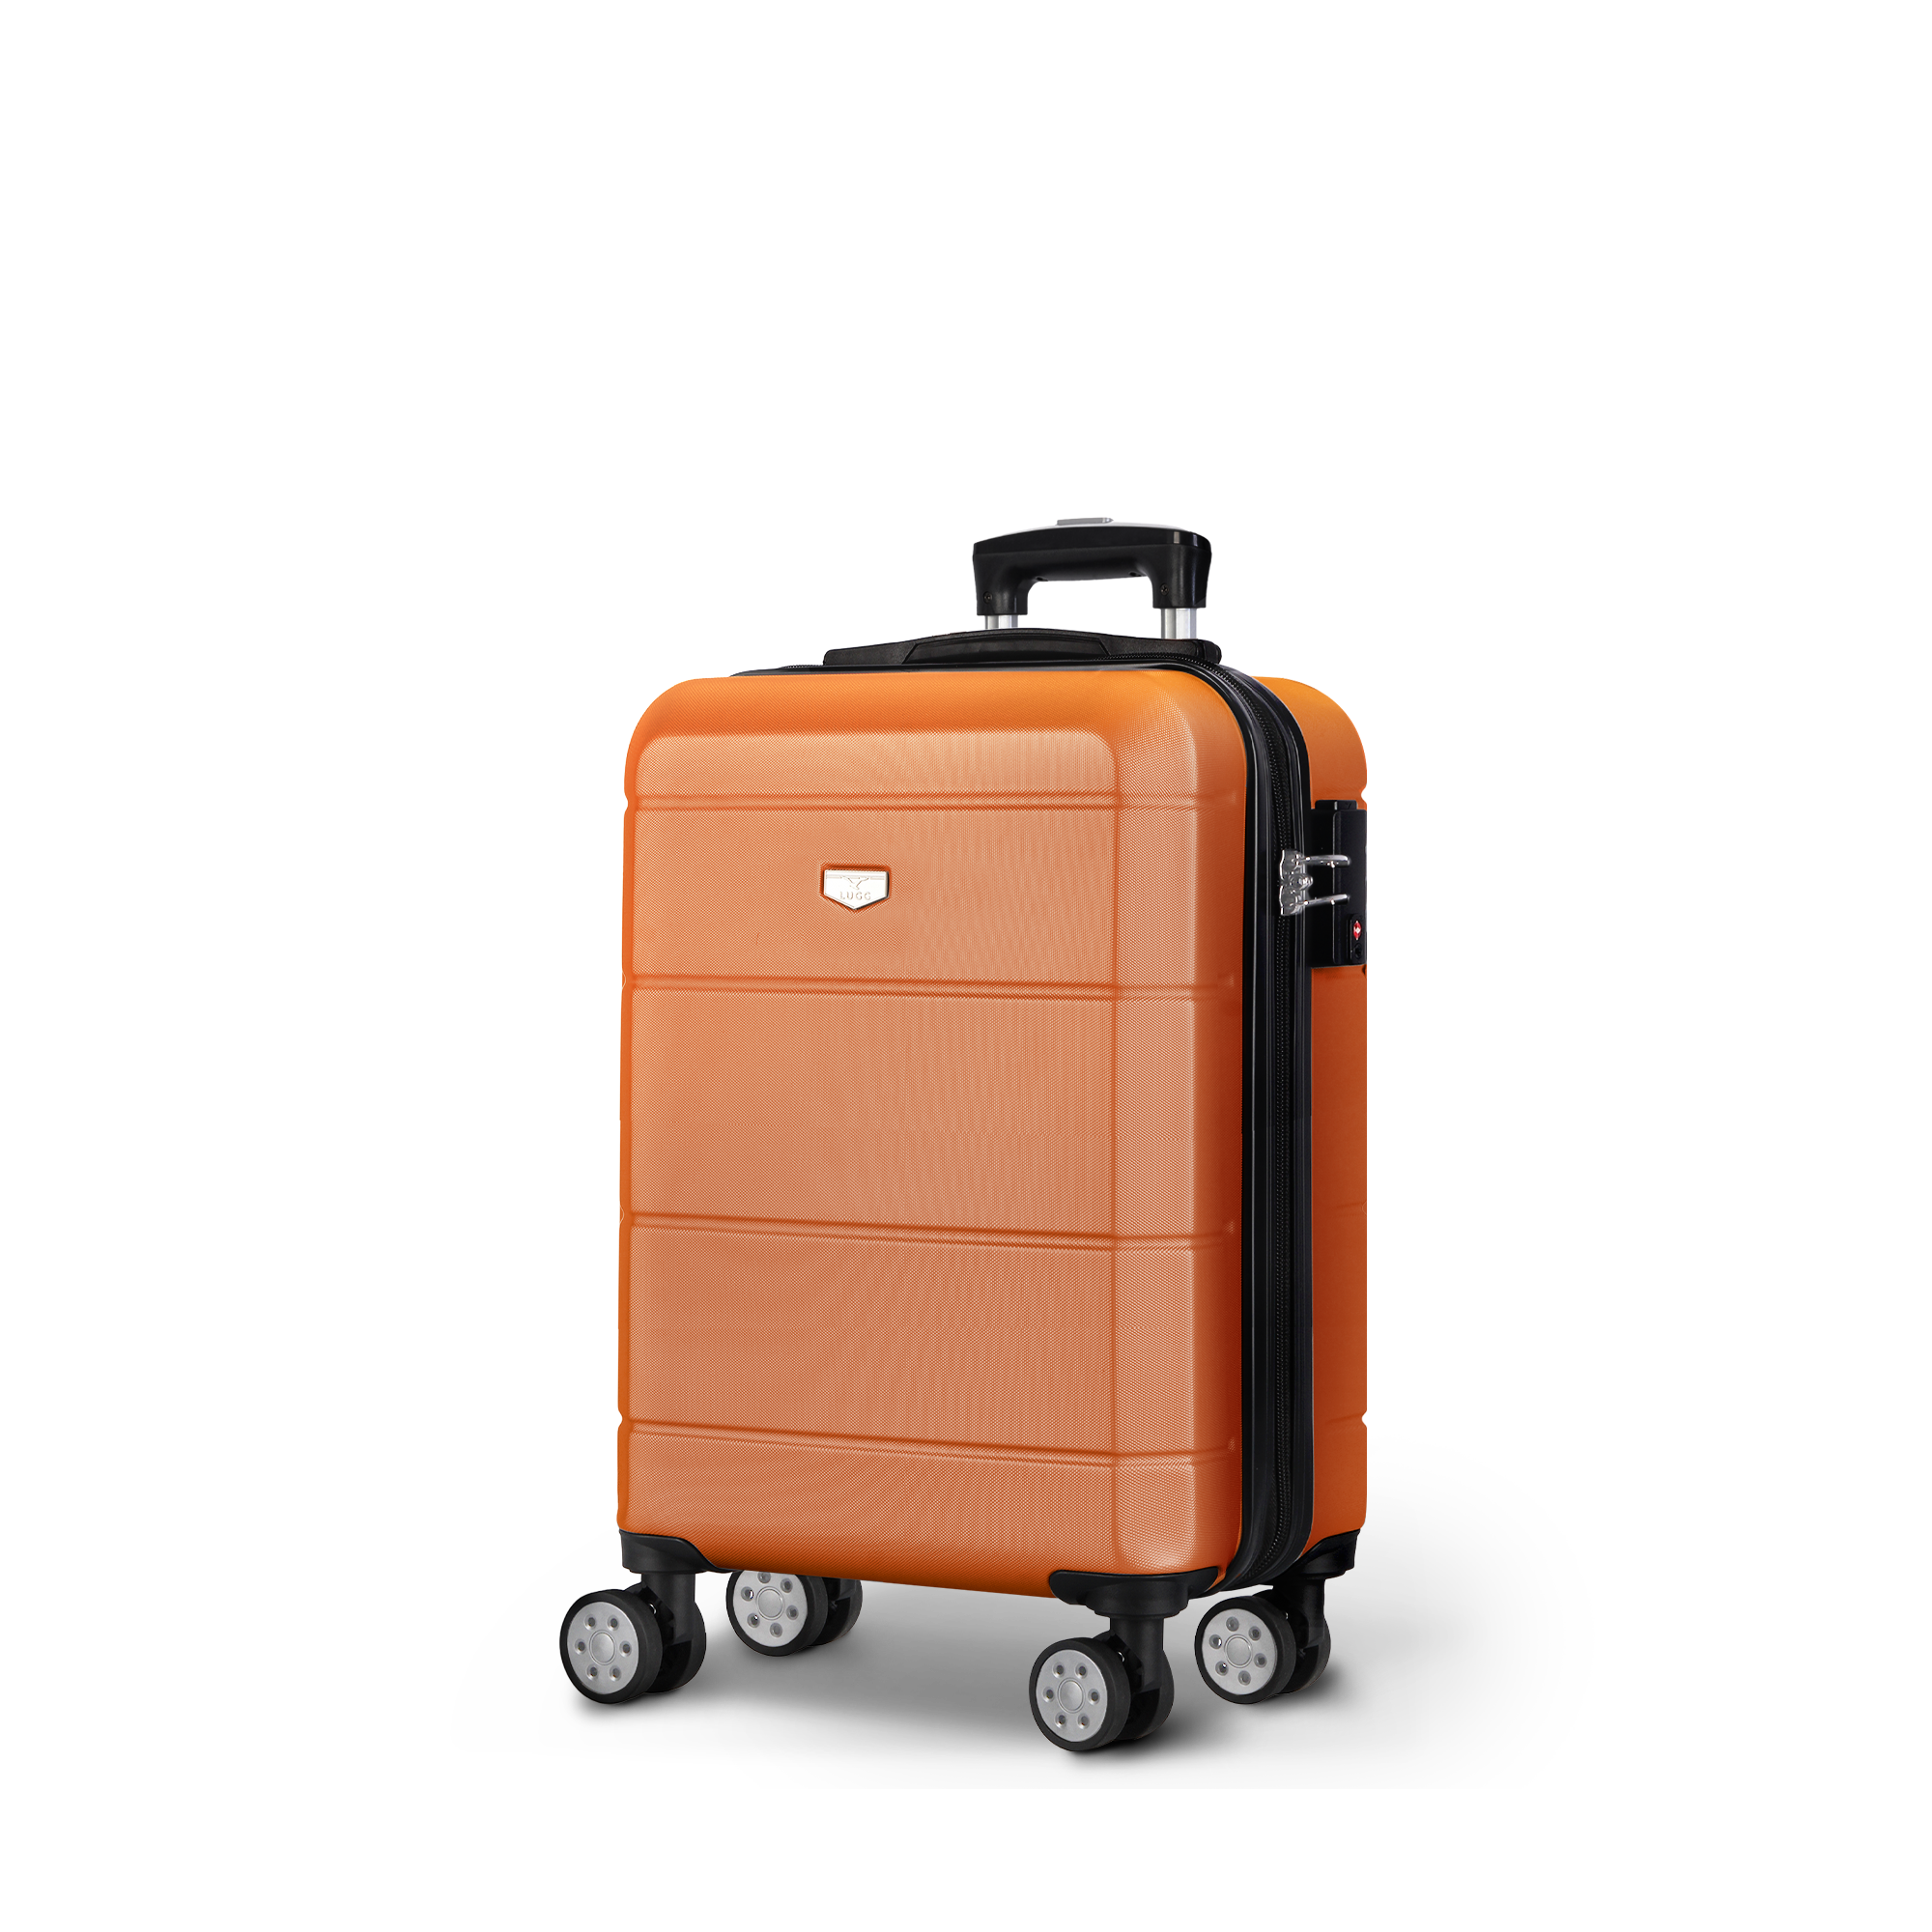 Jetset 20-inch Suitcase in Orange